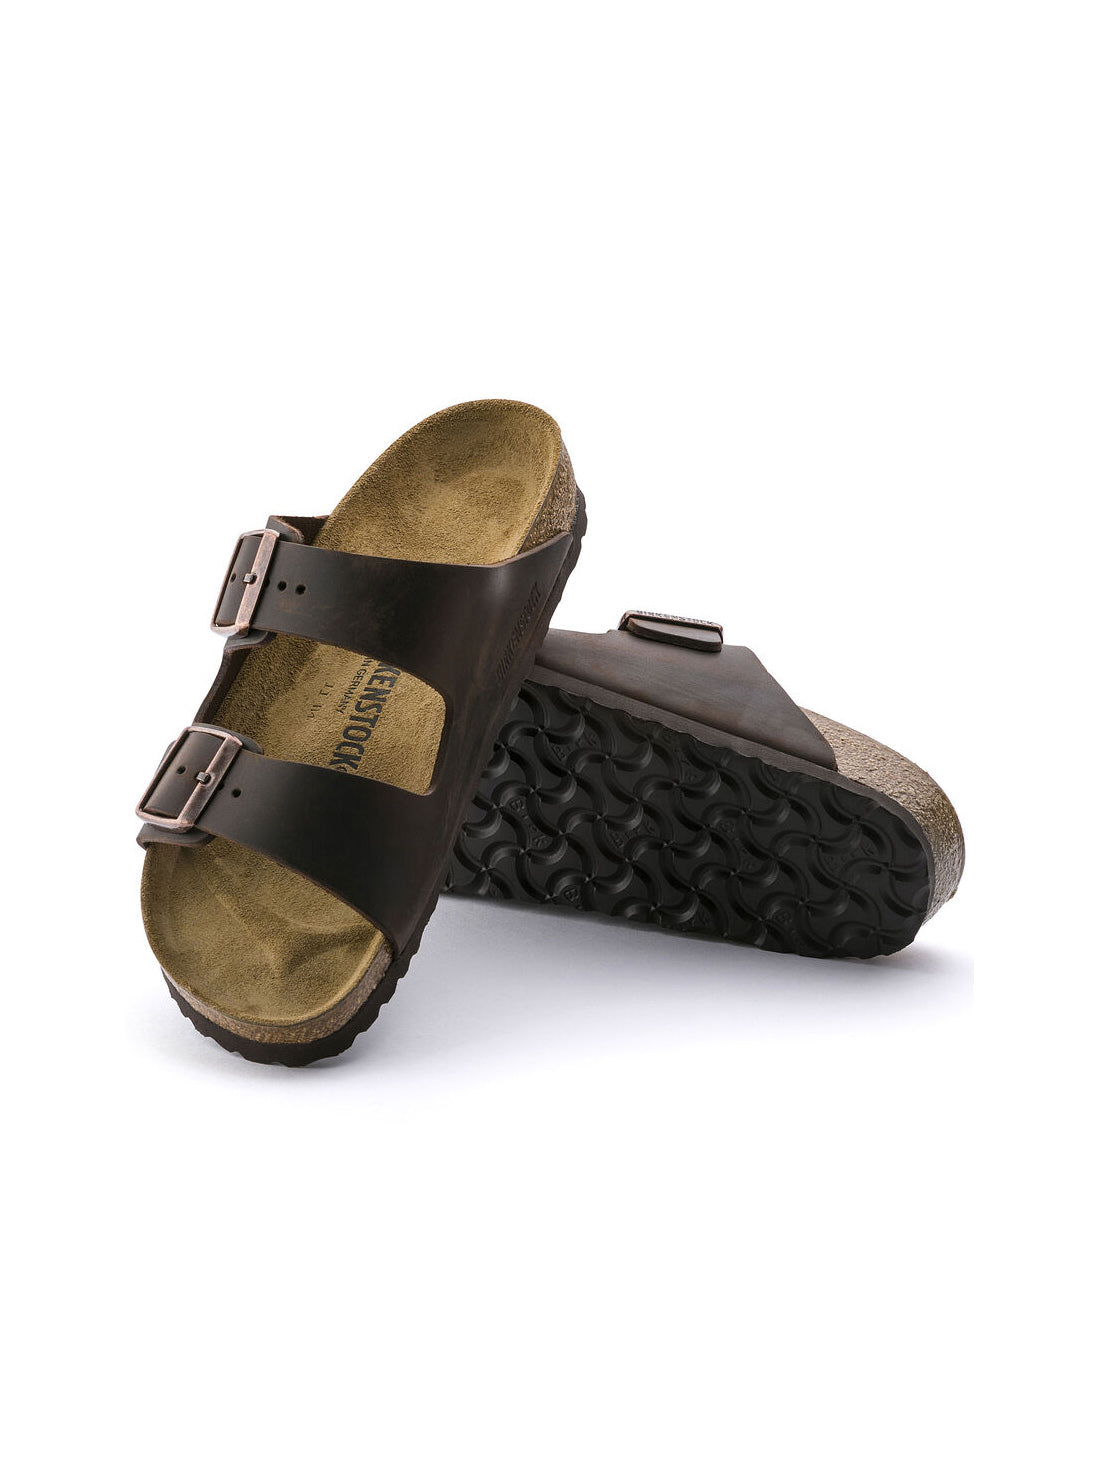 birkenstock arizona sandal in oiled leather habana